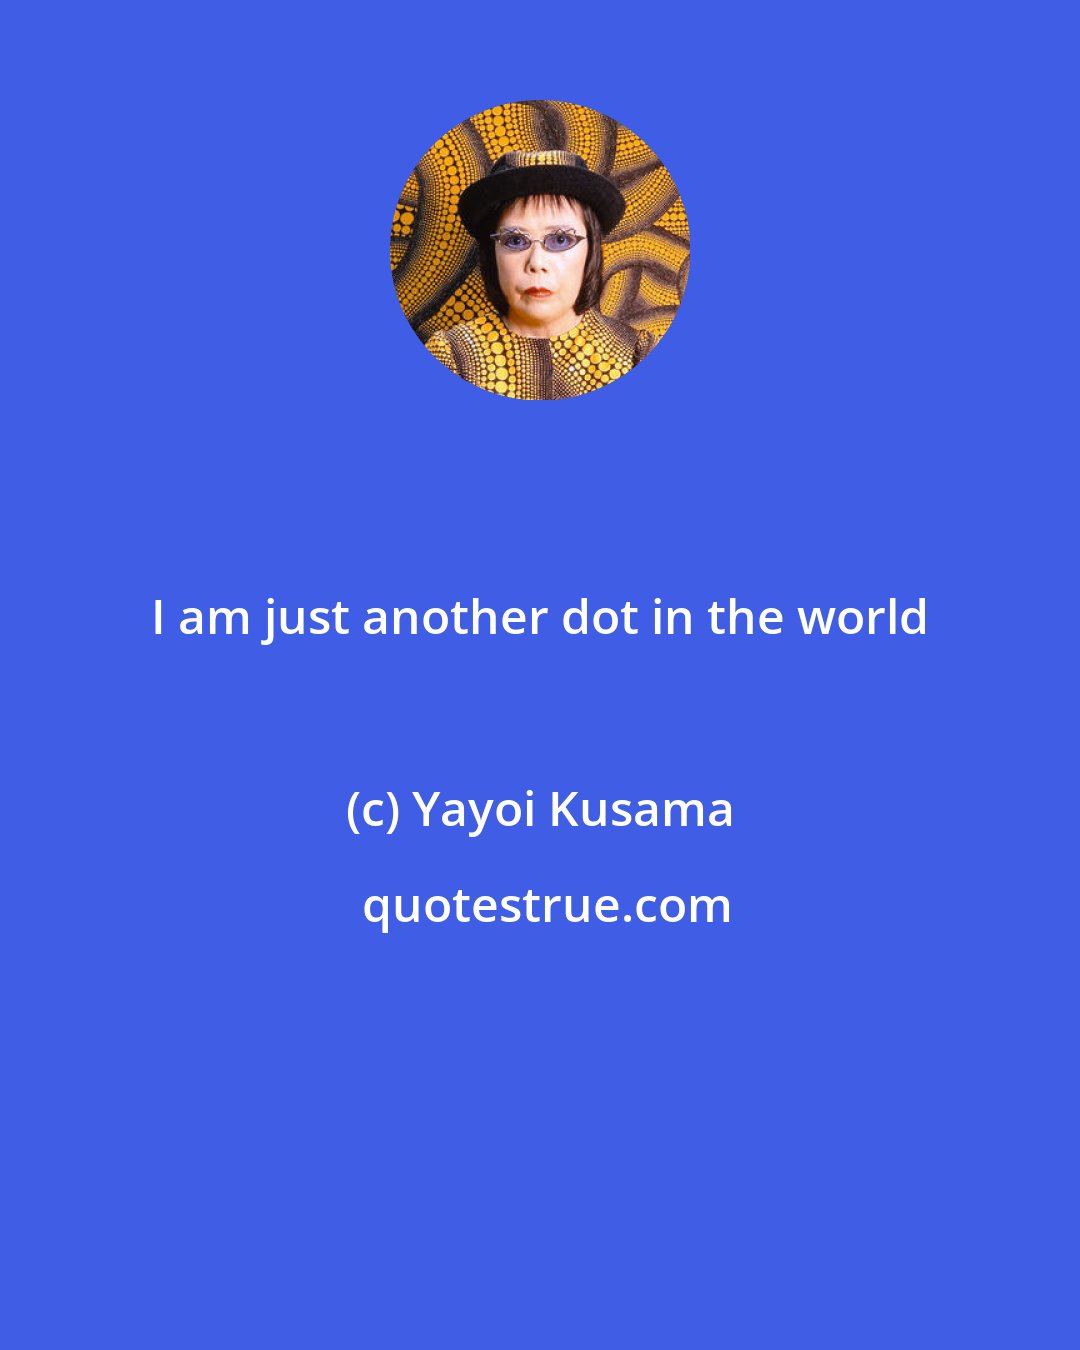 Yayoi Kusama: I am just another dot in the world